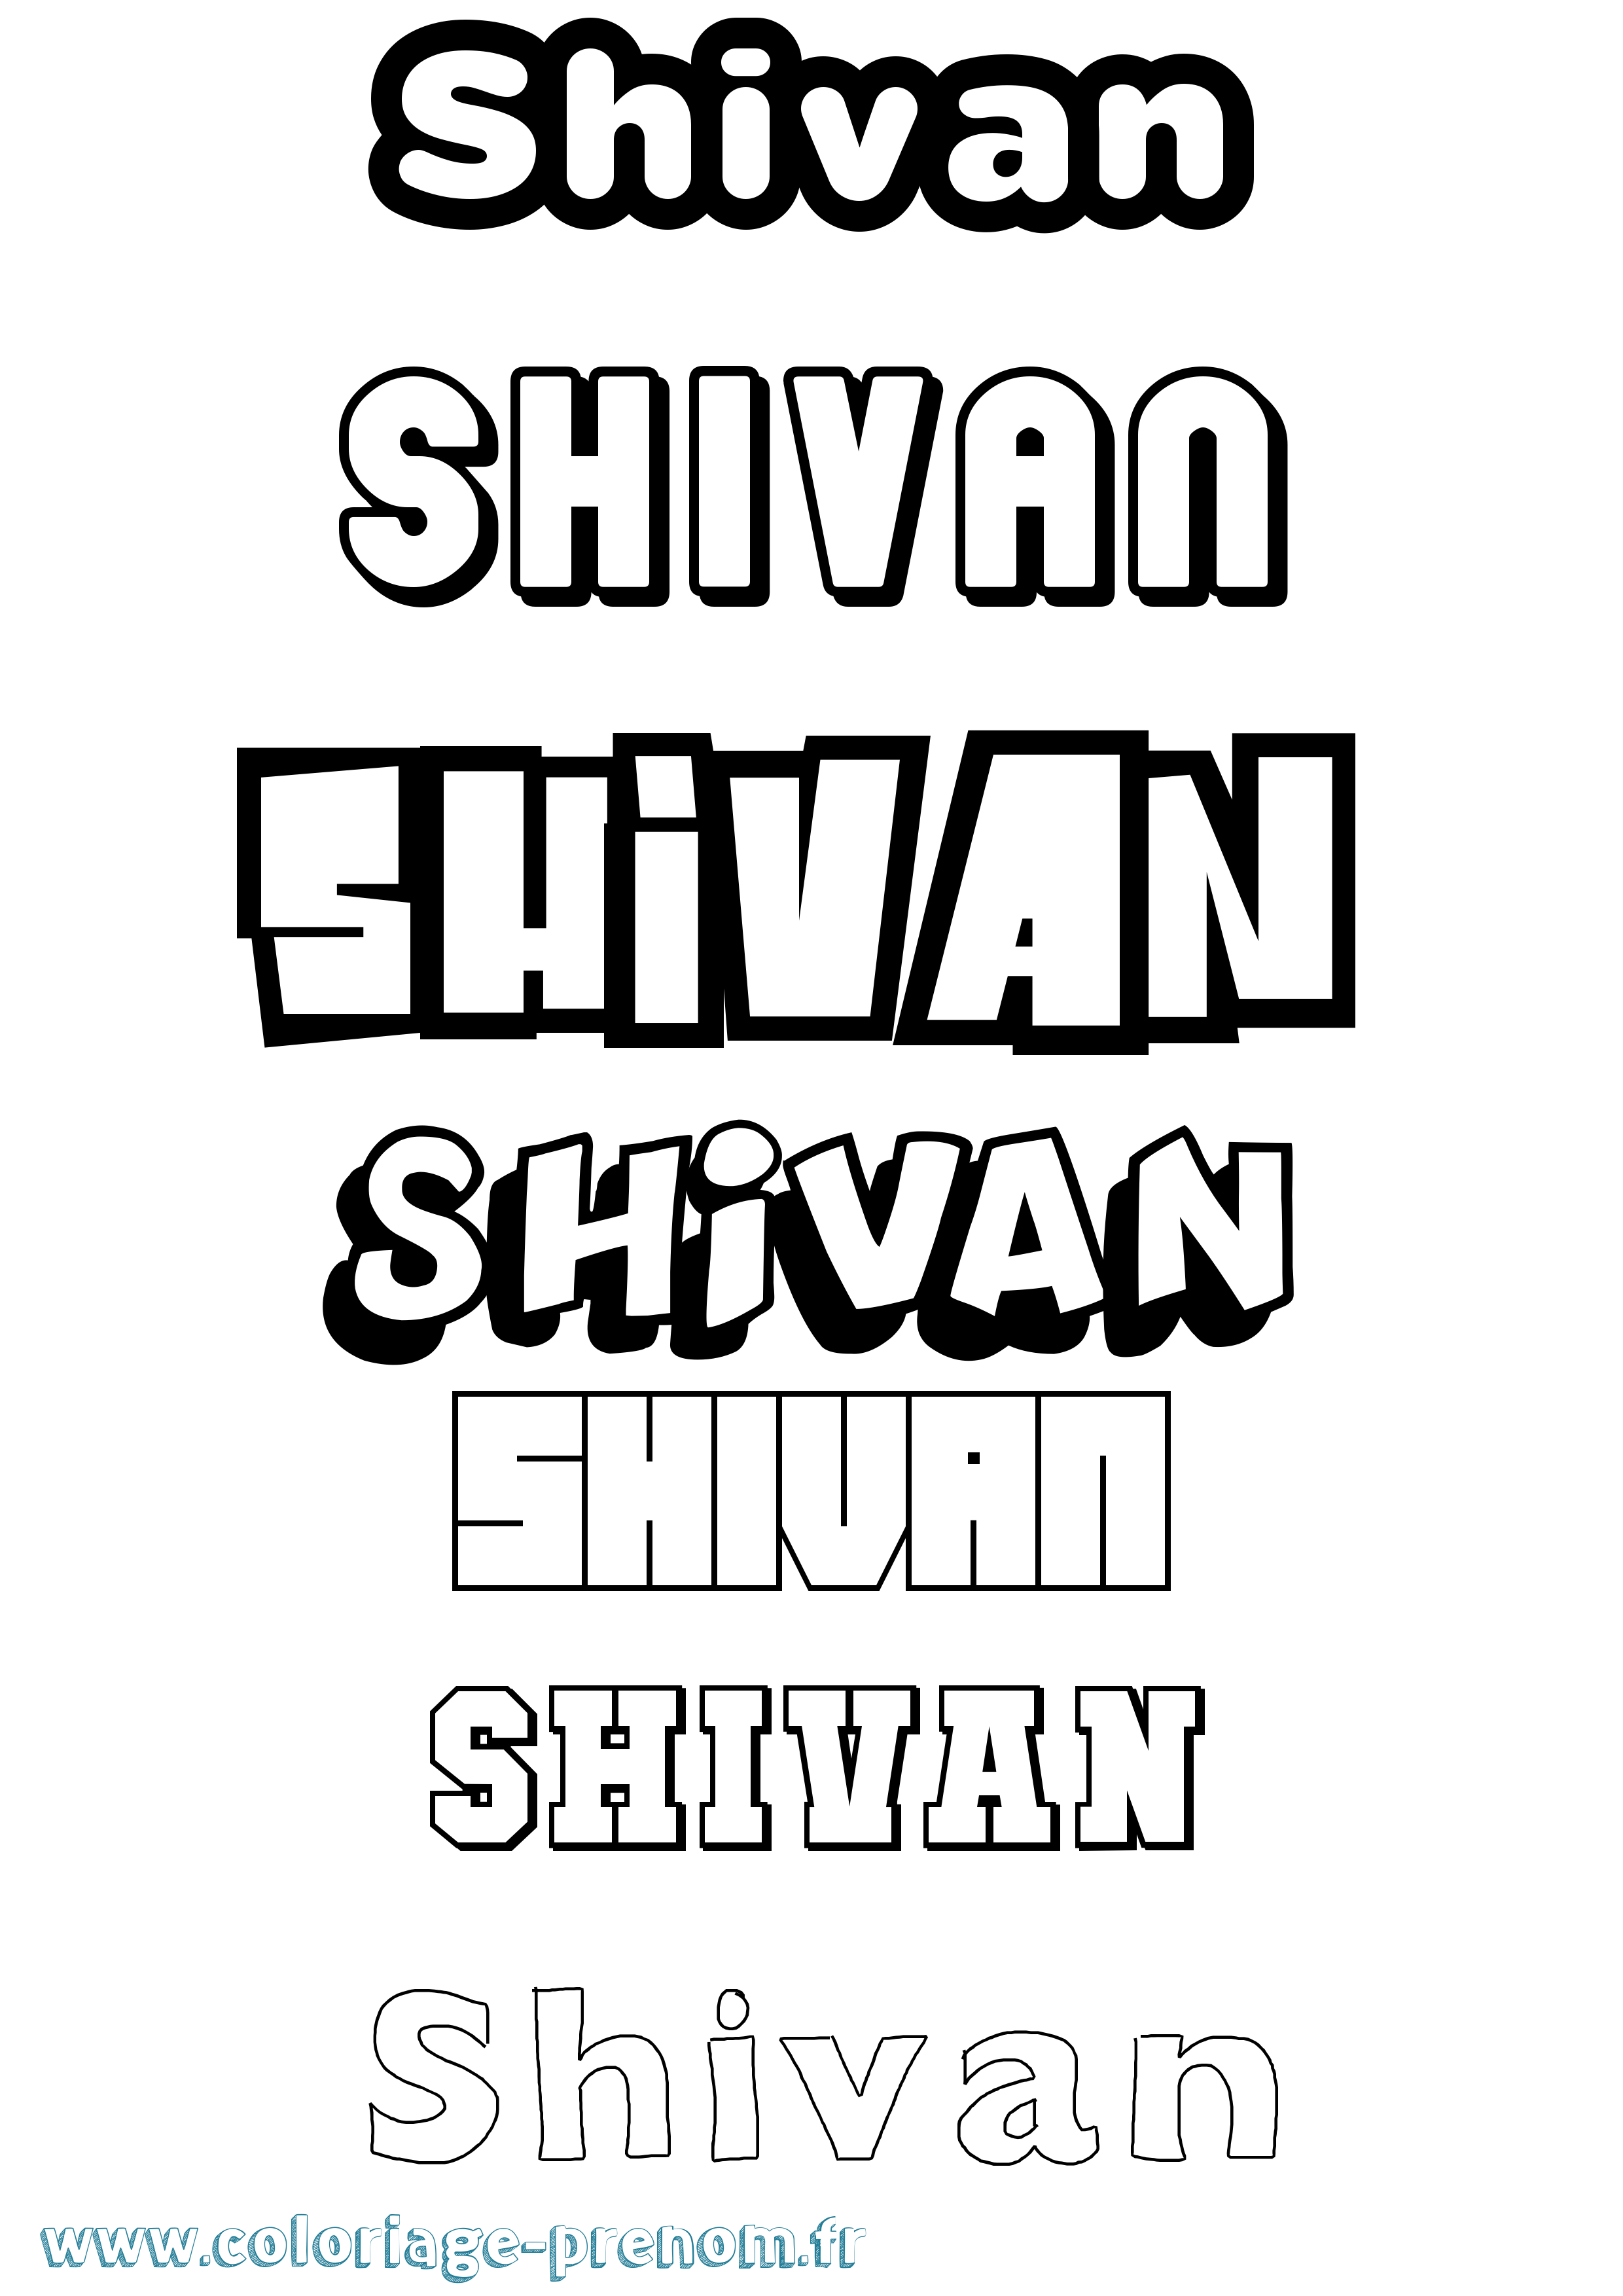 Coloriage prénom Shivan Simple